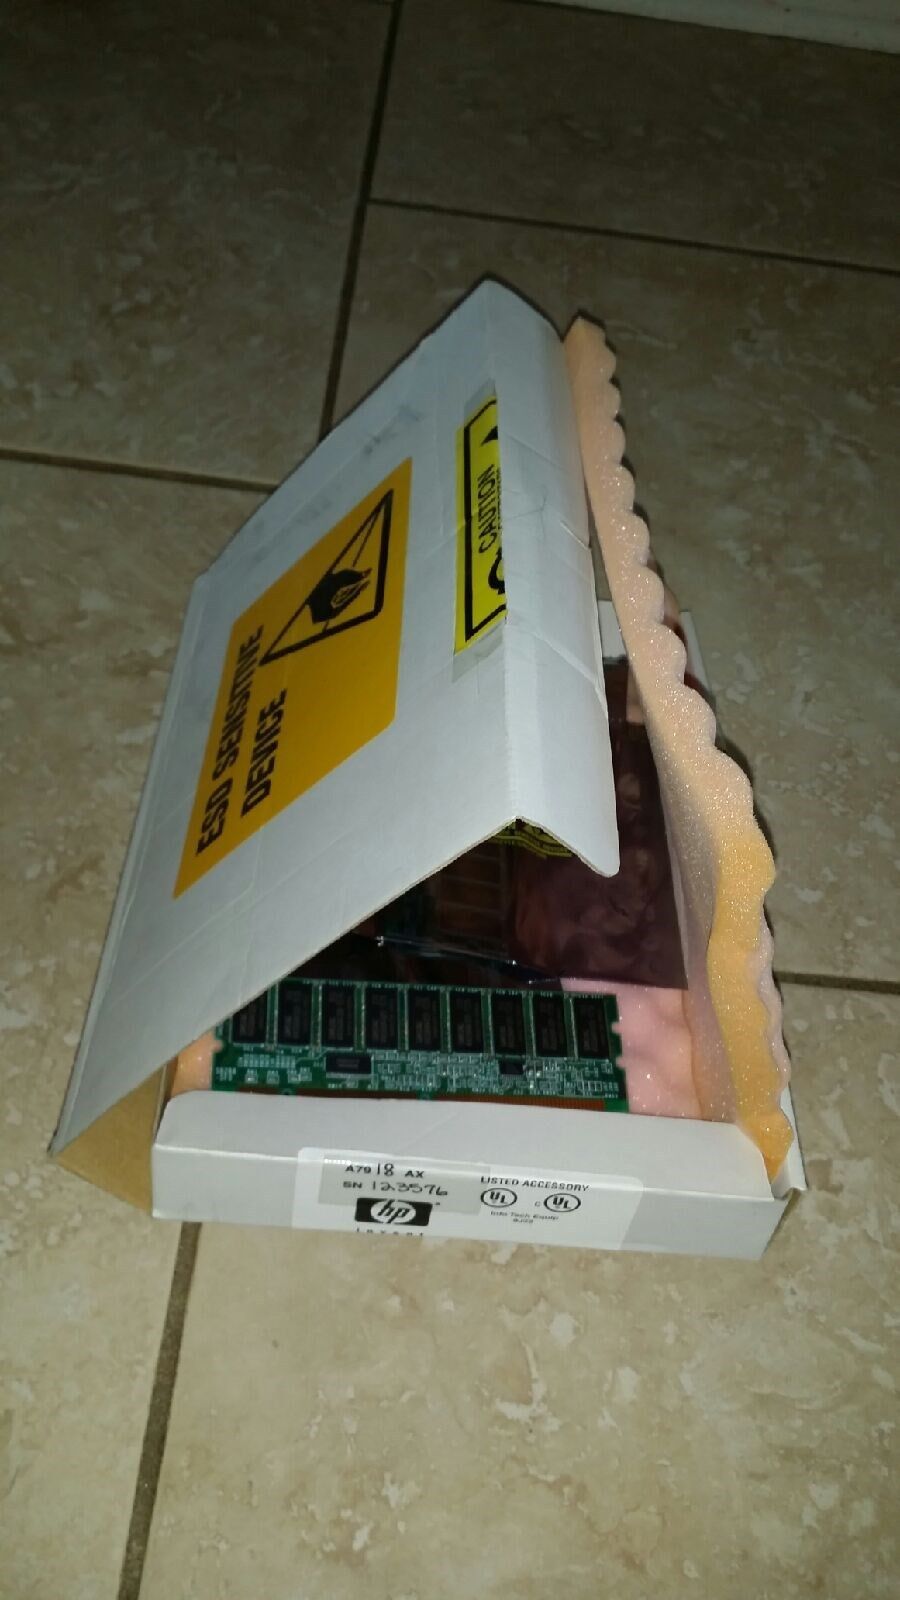 A7918AX HEWLETT-PACKARD 512MB CACHE MEMORY  GENUINE HP OEM (4) UNITS INSIDE BOX